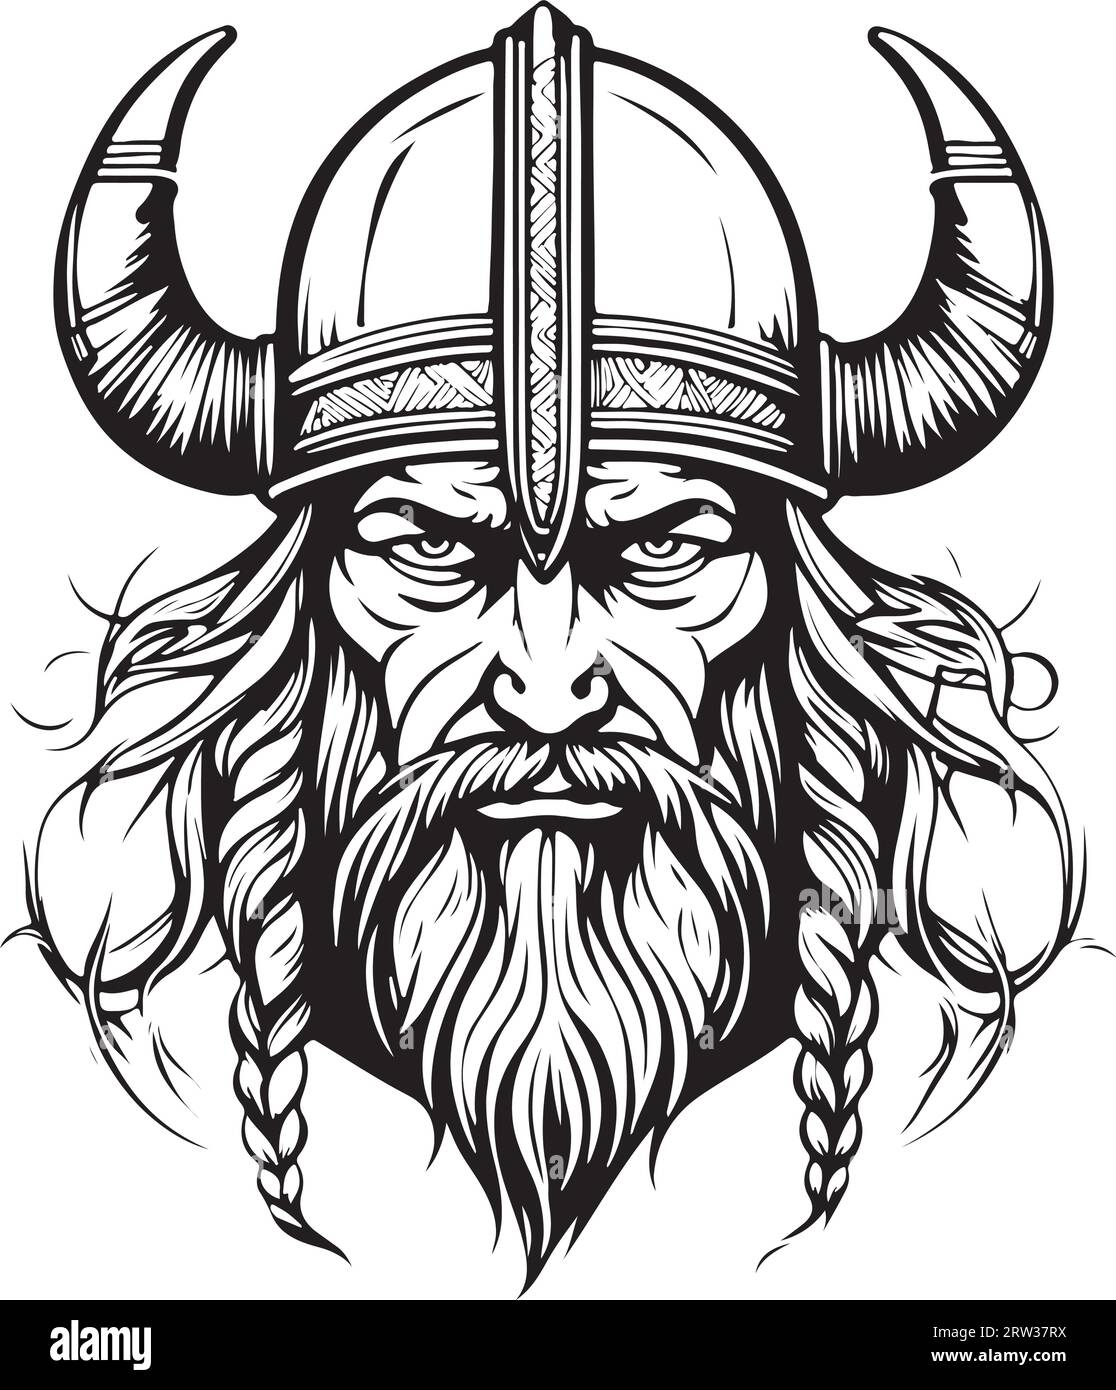 Excellent lovely viking emblem vector logo art Stock Vector